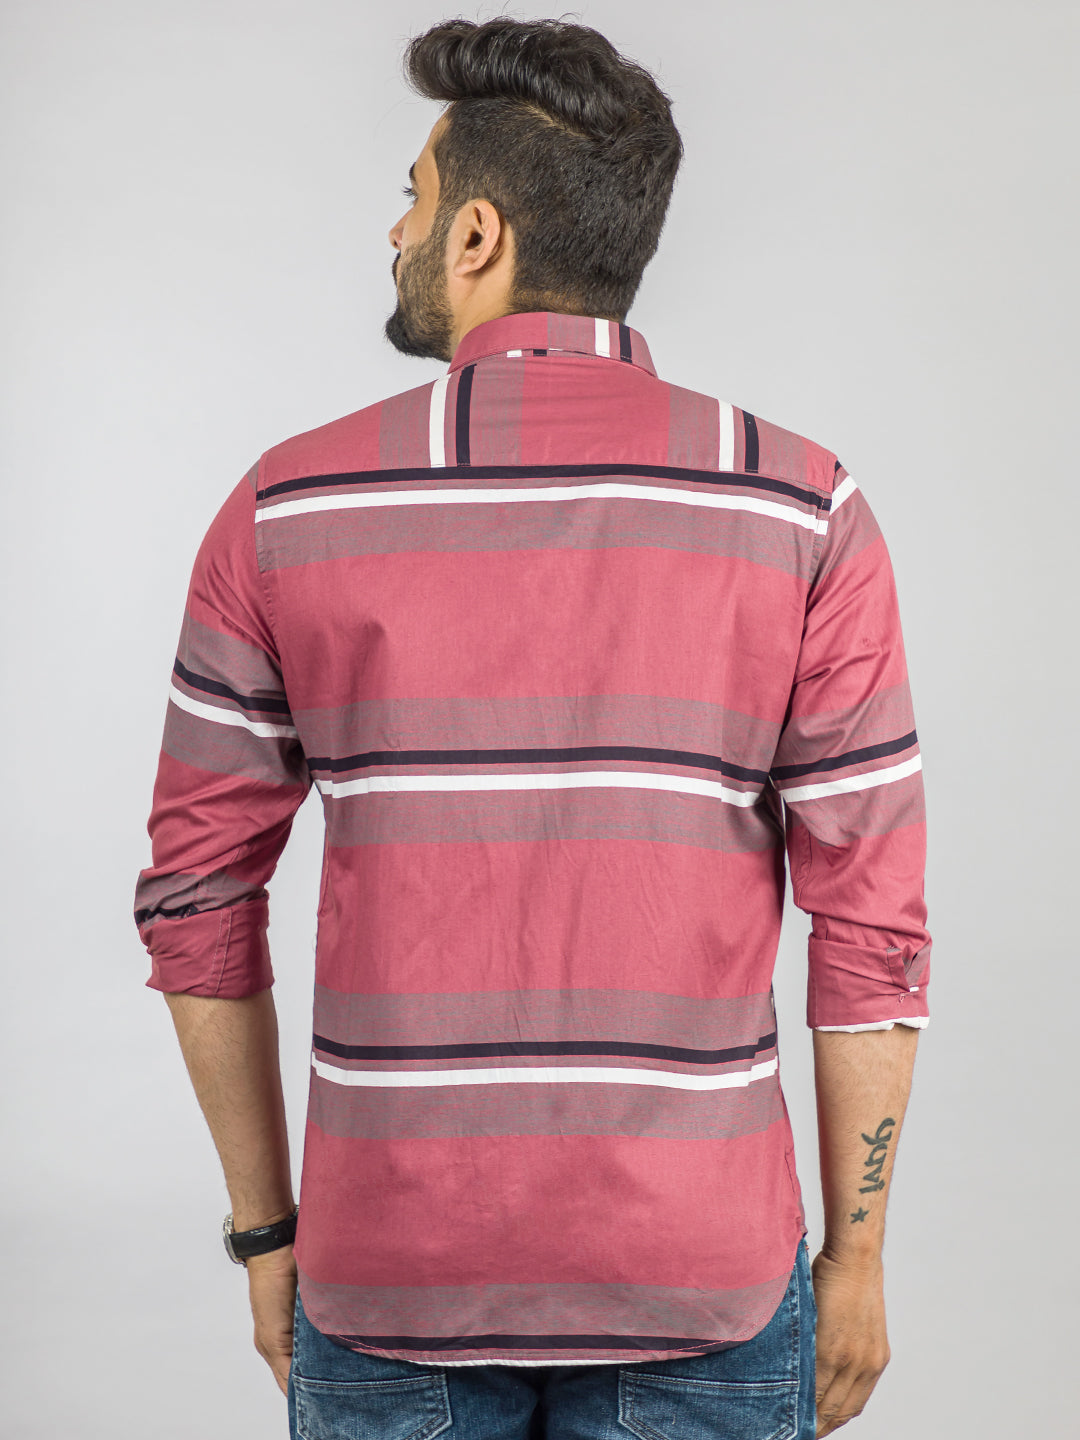 Stripes Blush Pink Shirt